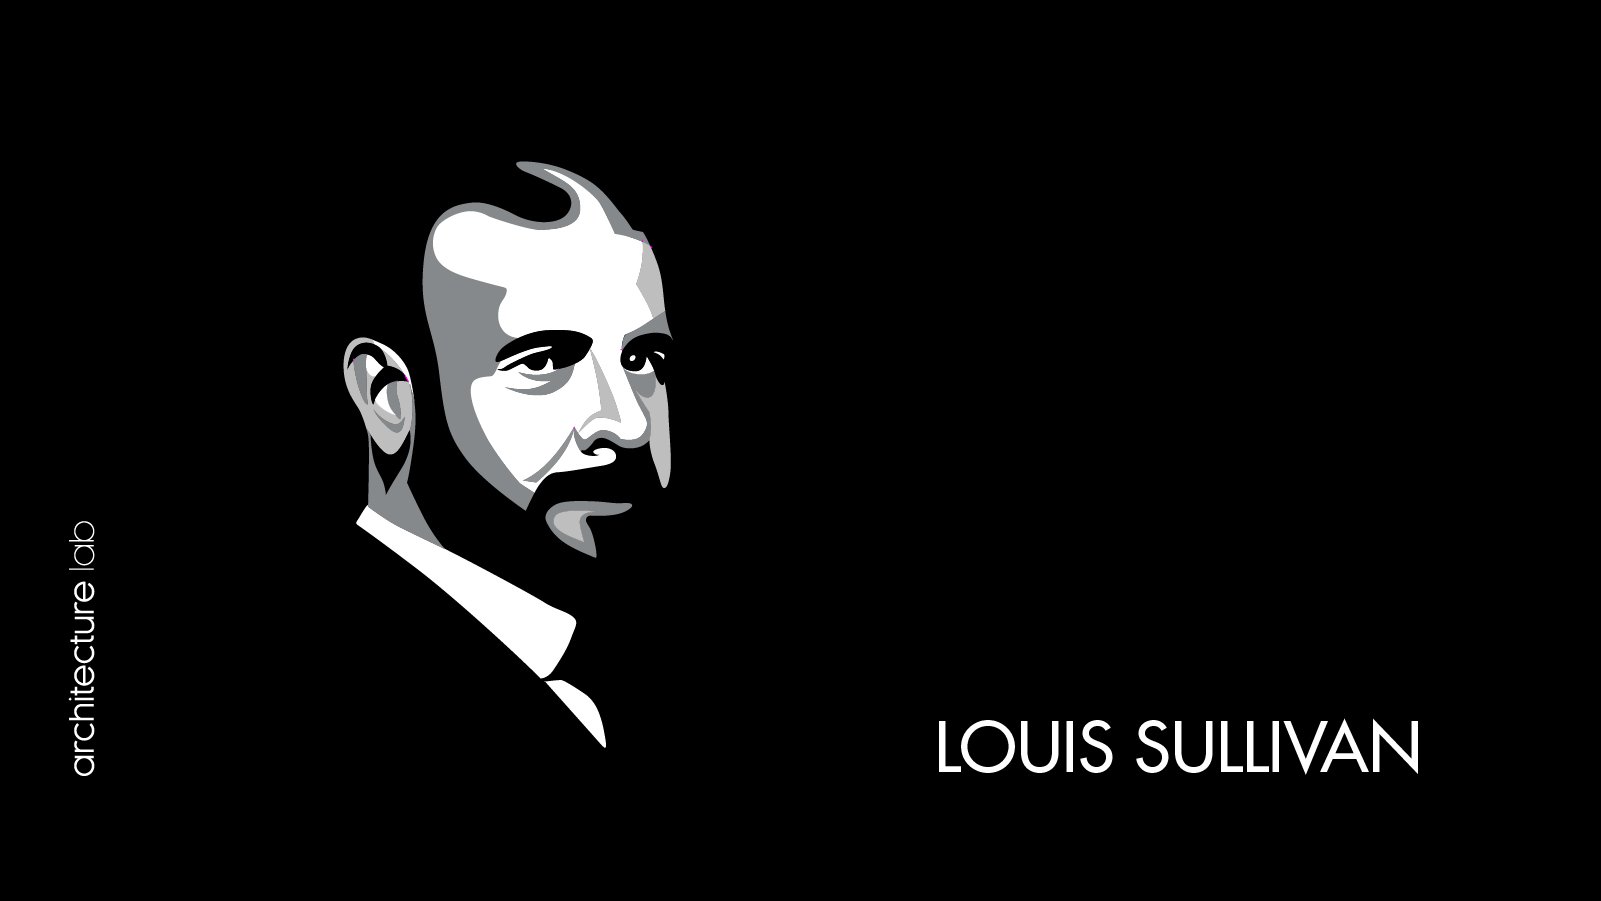 Louis sullivan: biography, works, awards